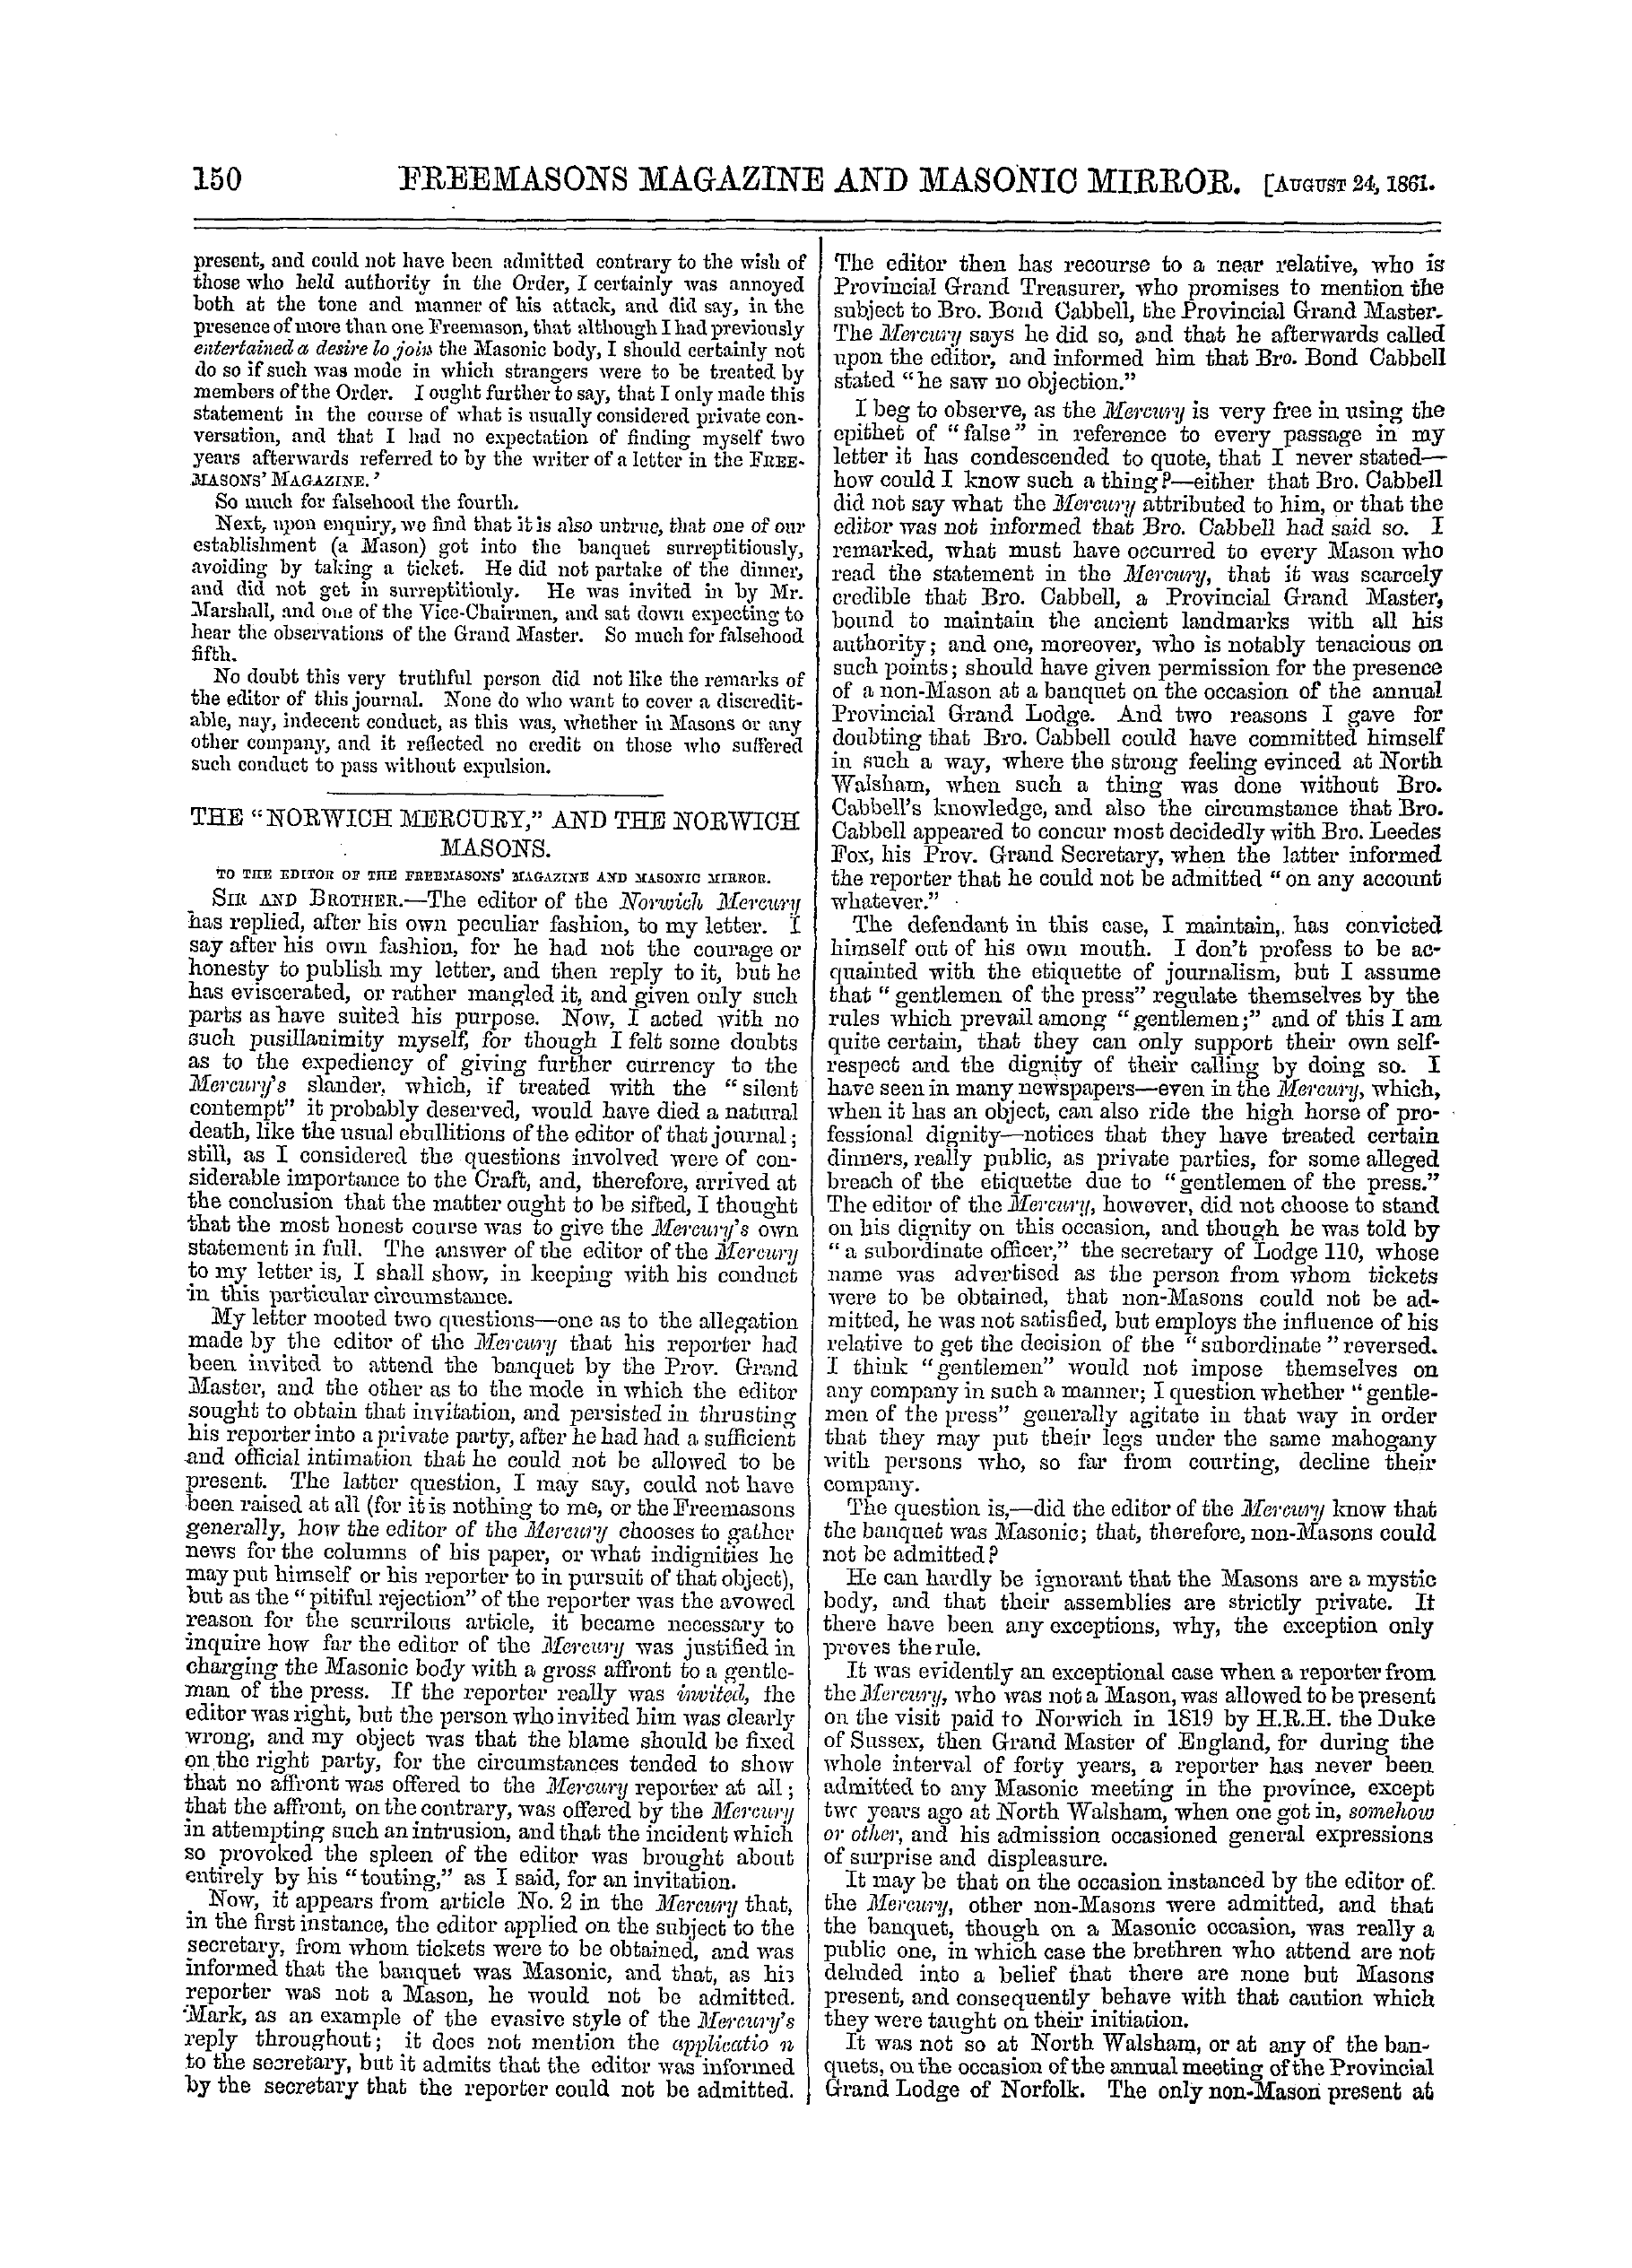 The Freemasons' Monthly Magazine: 1861-08-24 - The "Norwich Mercury," And The Norwich Masons.